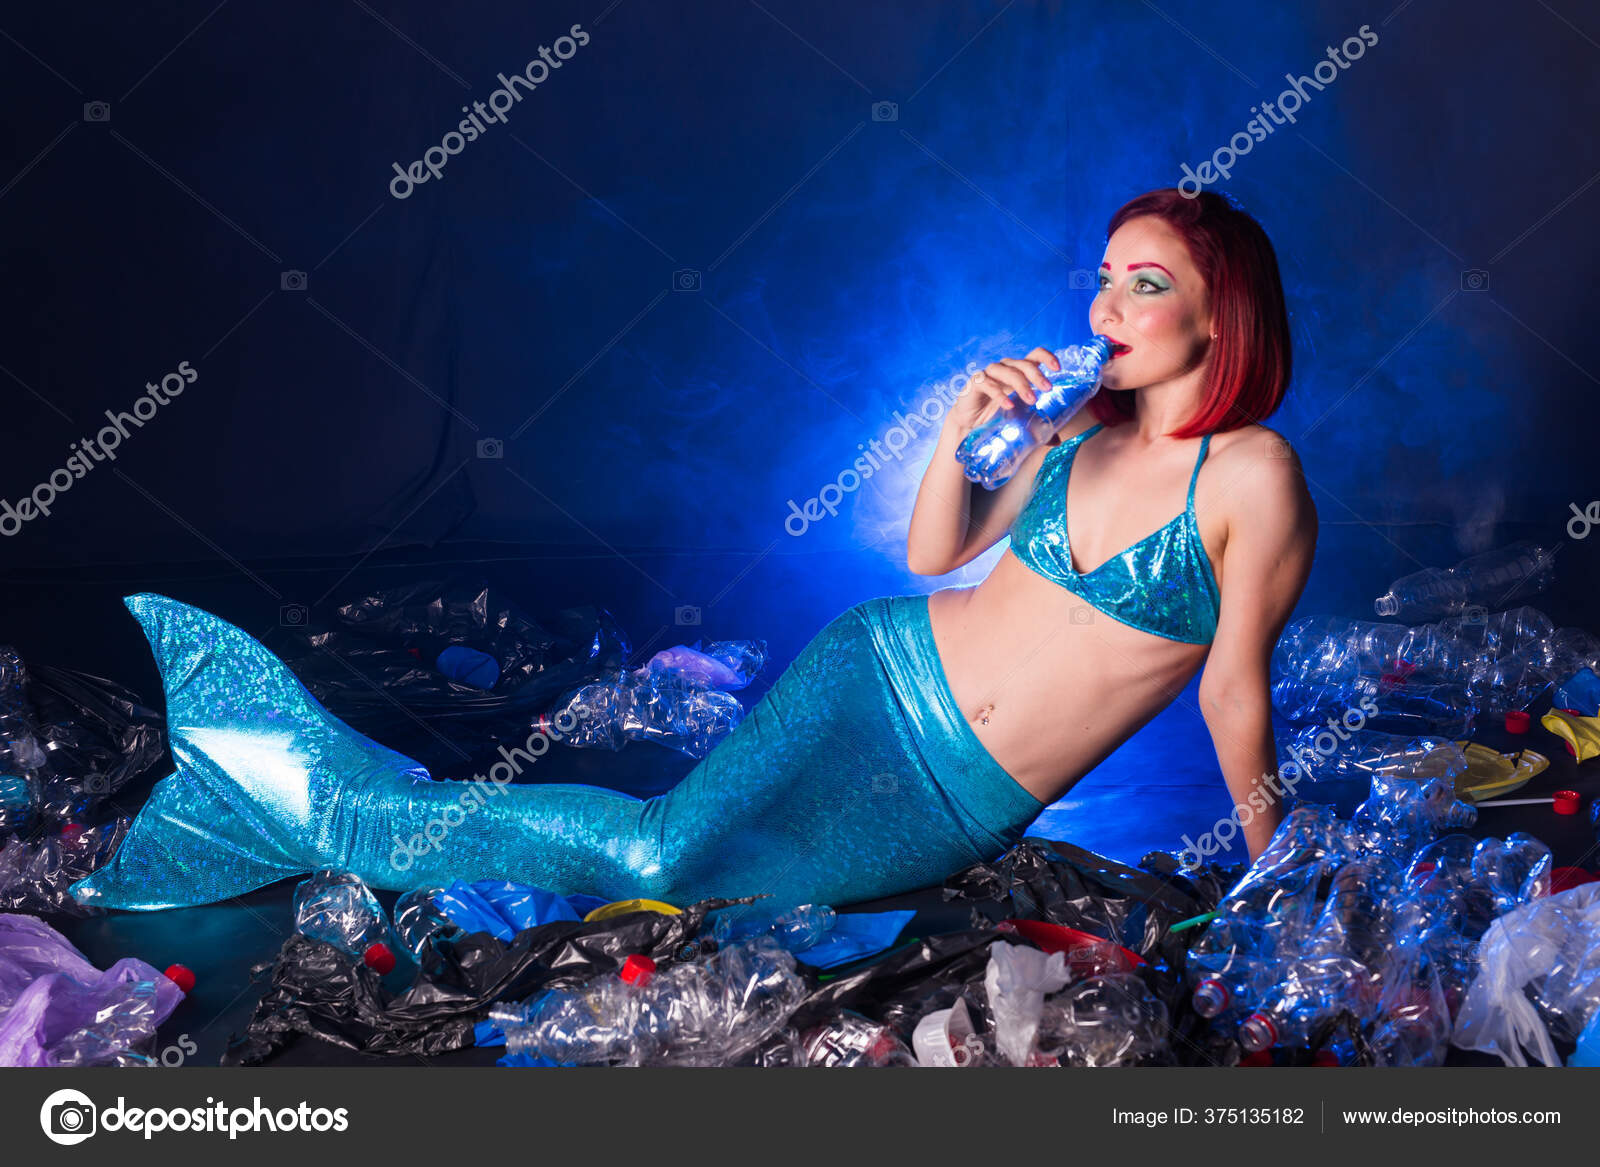 https://st3.depositphotos.com/4509995/37513/i/1600/depositphotos_375135182-stock-photo-fantasy-stupid-mermaid-in-deep.jpg